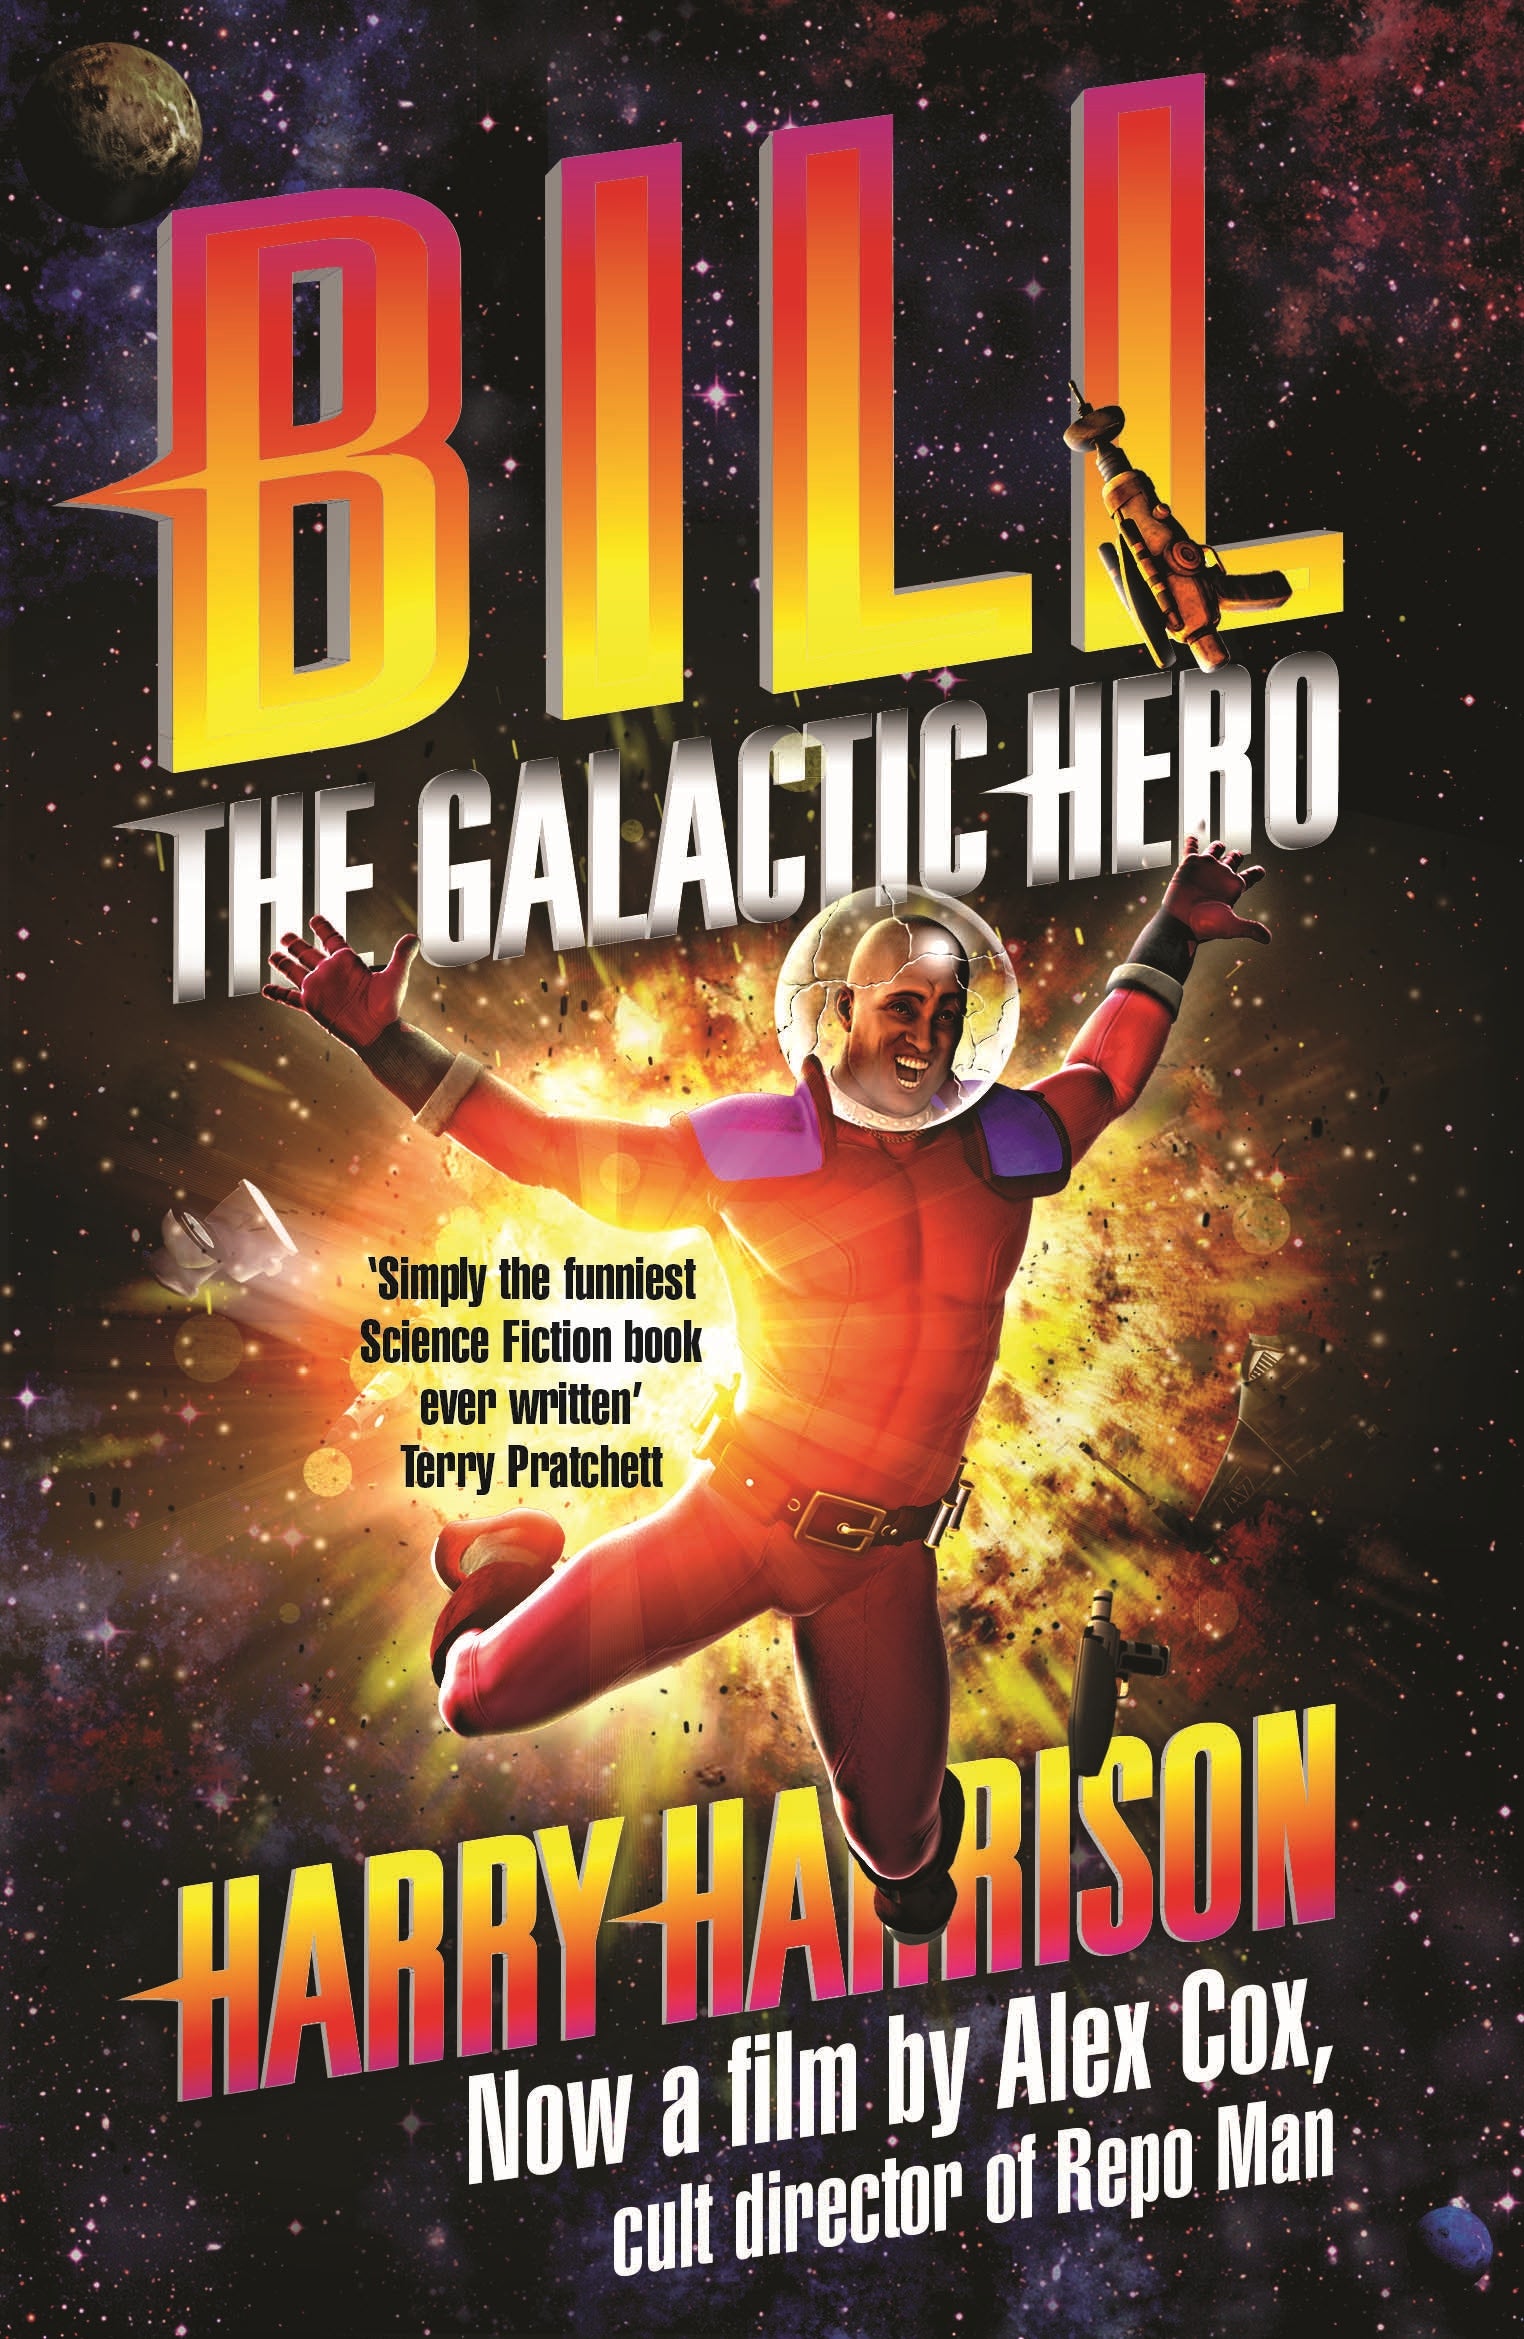 Bill, the Galactic Hero by Harry Harrison